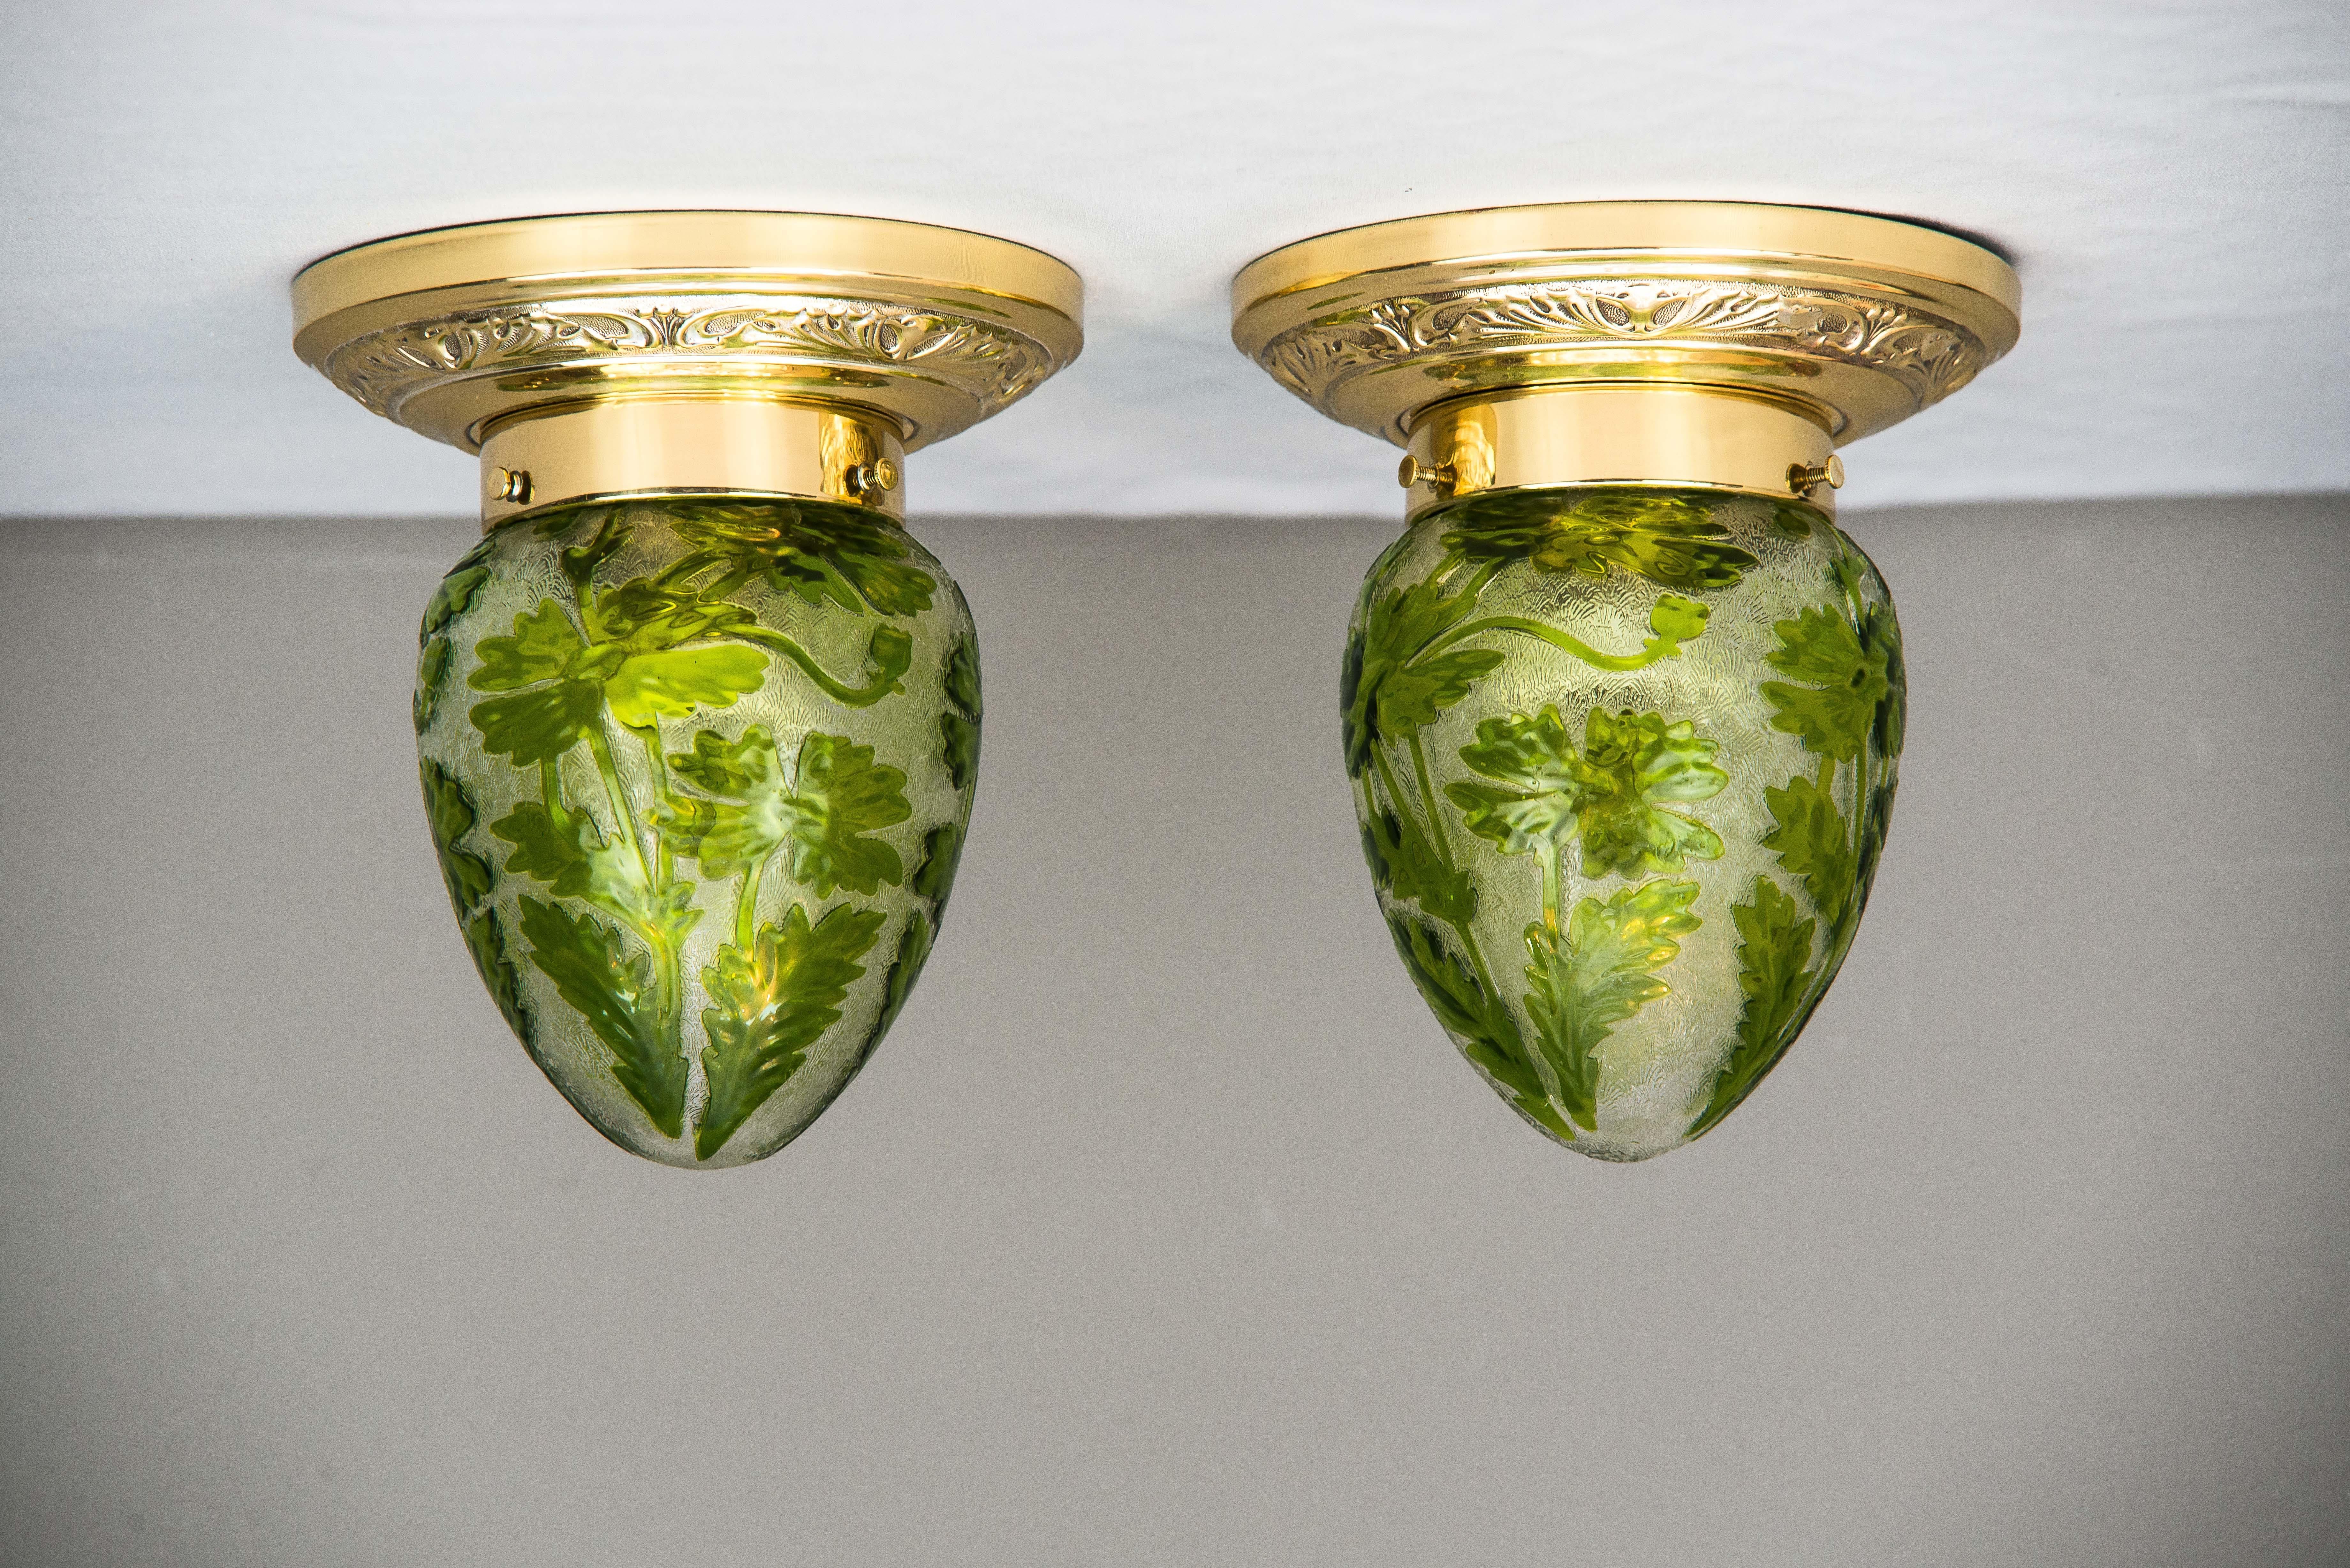 Jugendstil ceiling lamps, circa 1908
Polished and stove enamelled 
Beautiful original glasses
Only one left
